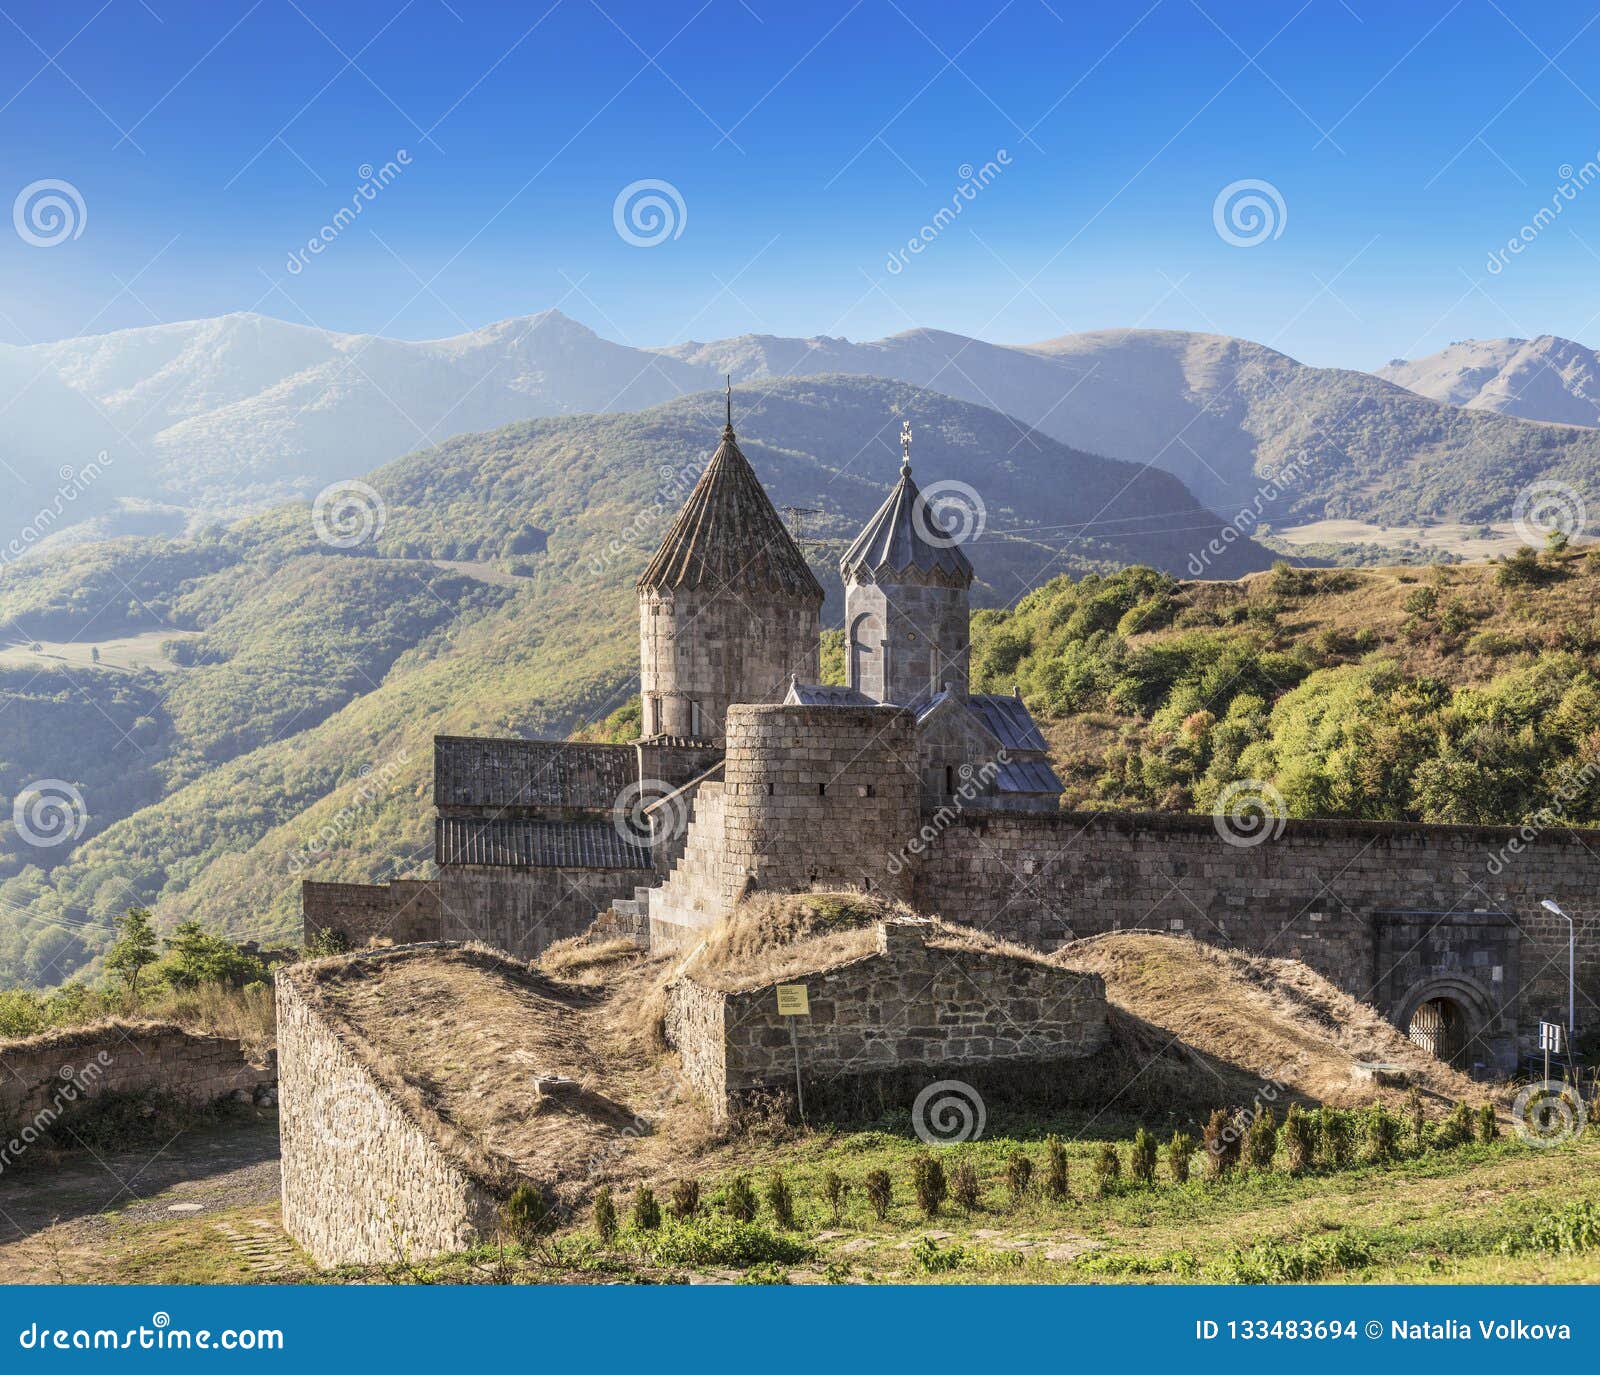 tatev monastery-armenian monastery complex of the late ix-early x centuries in syunik region